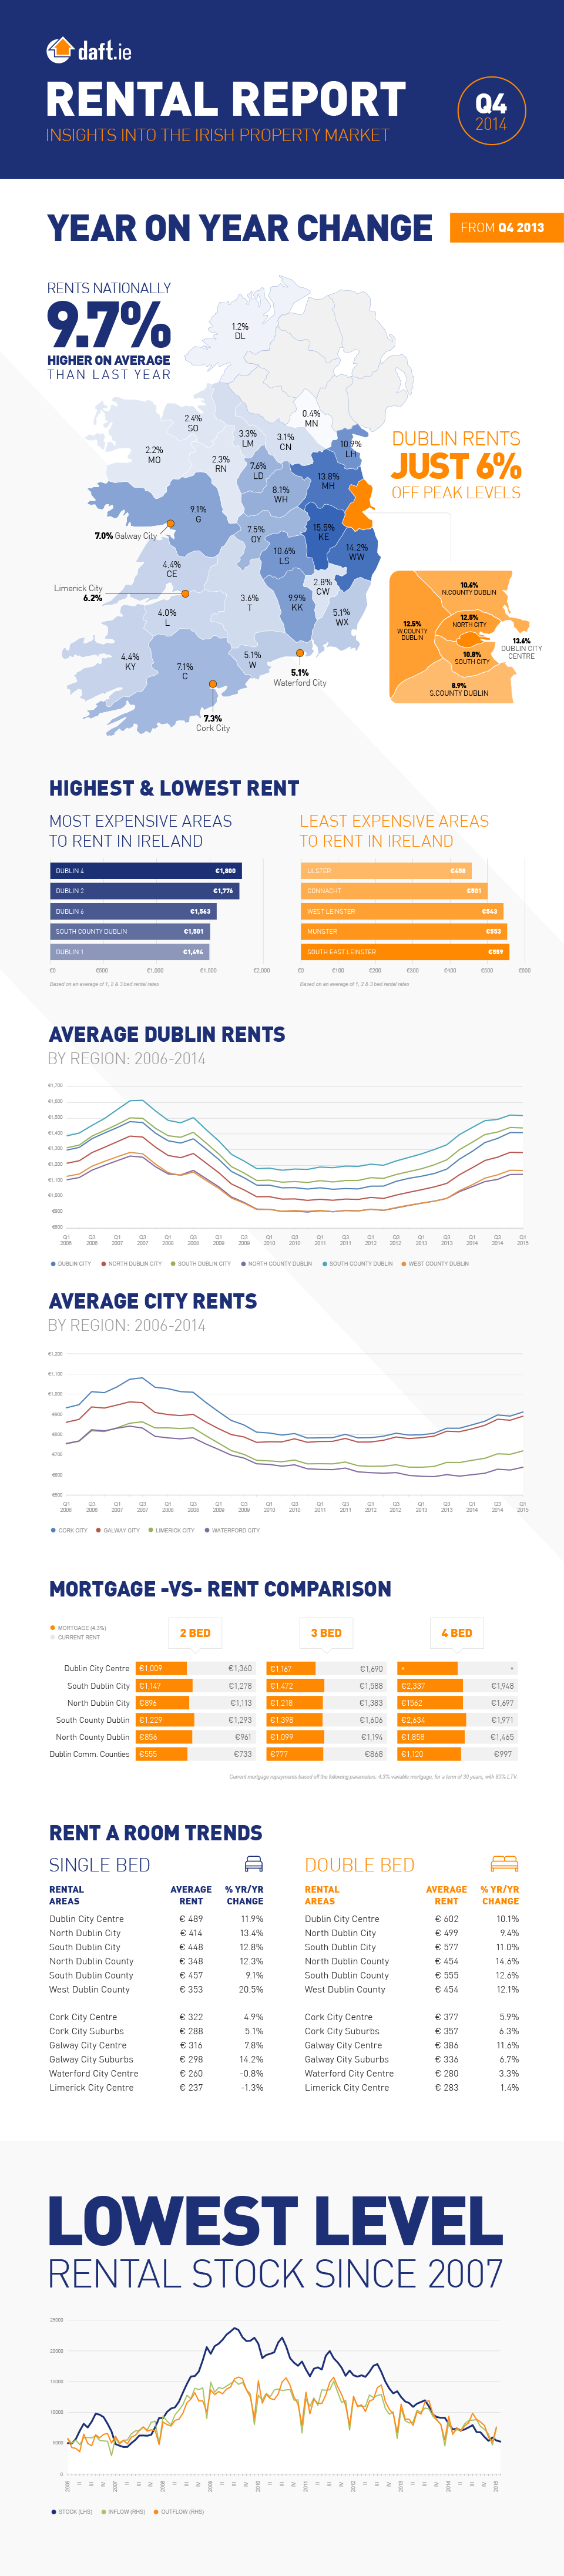 Daft.ie Rental Report: Q4 2014 Infographic